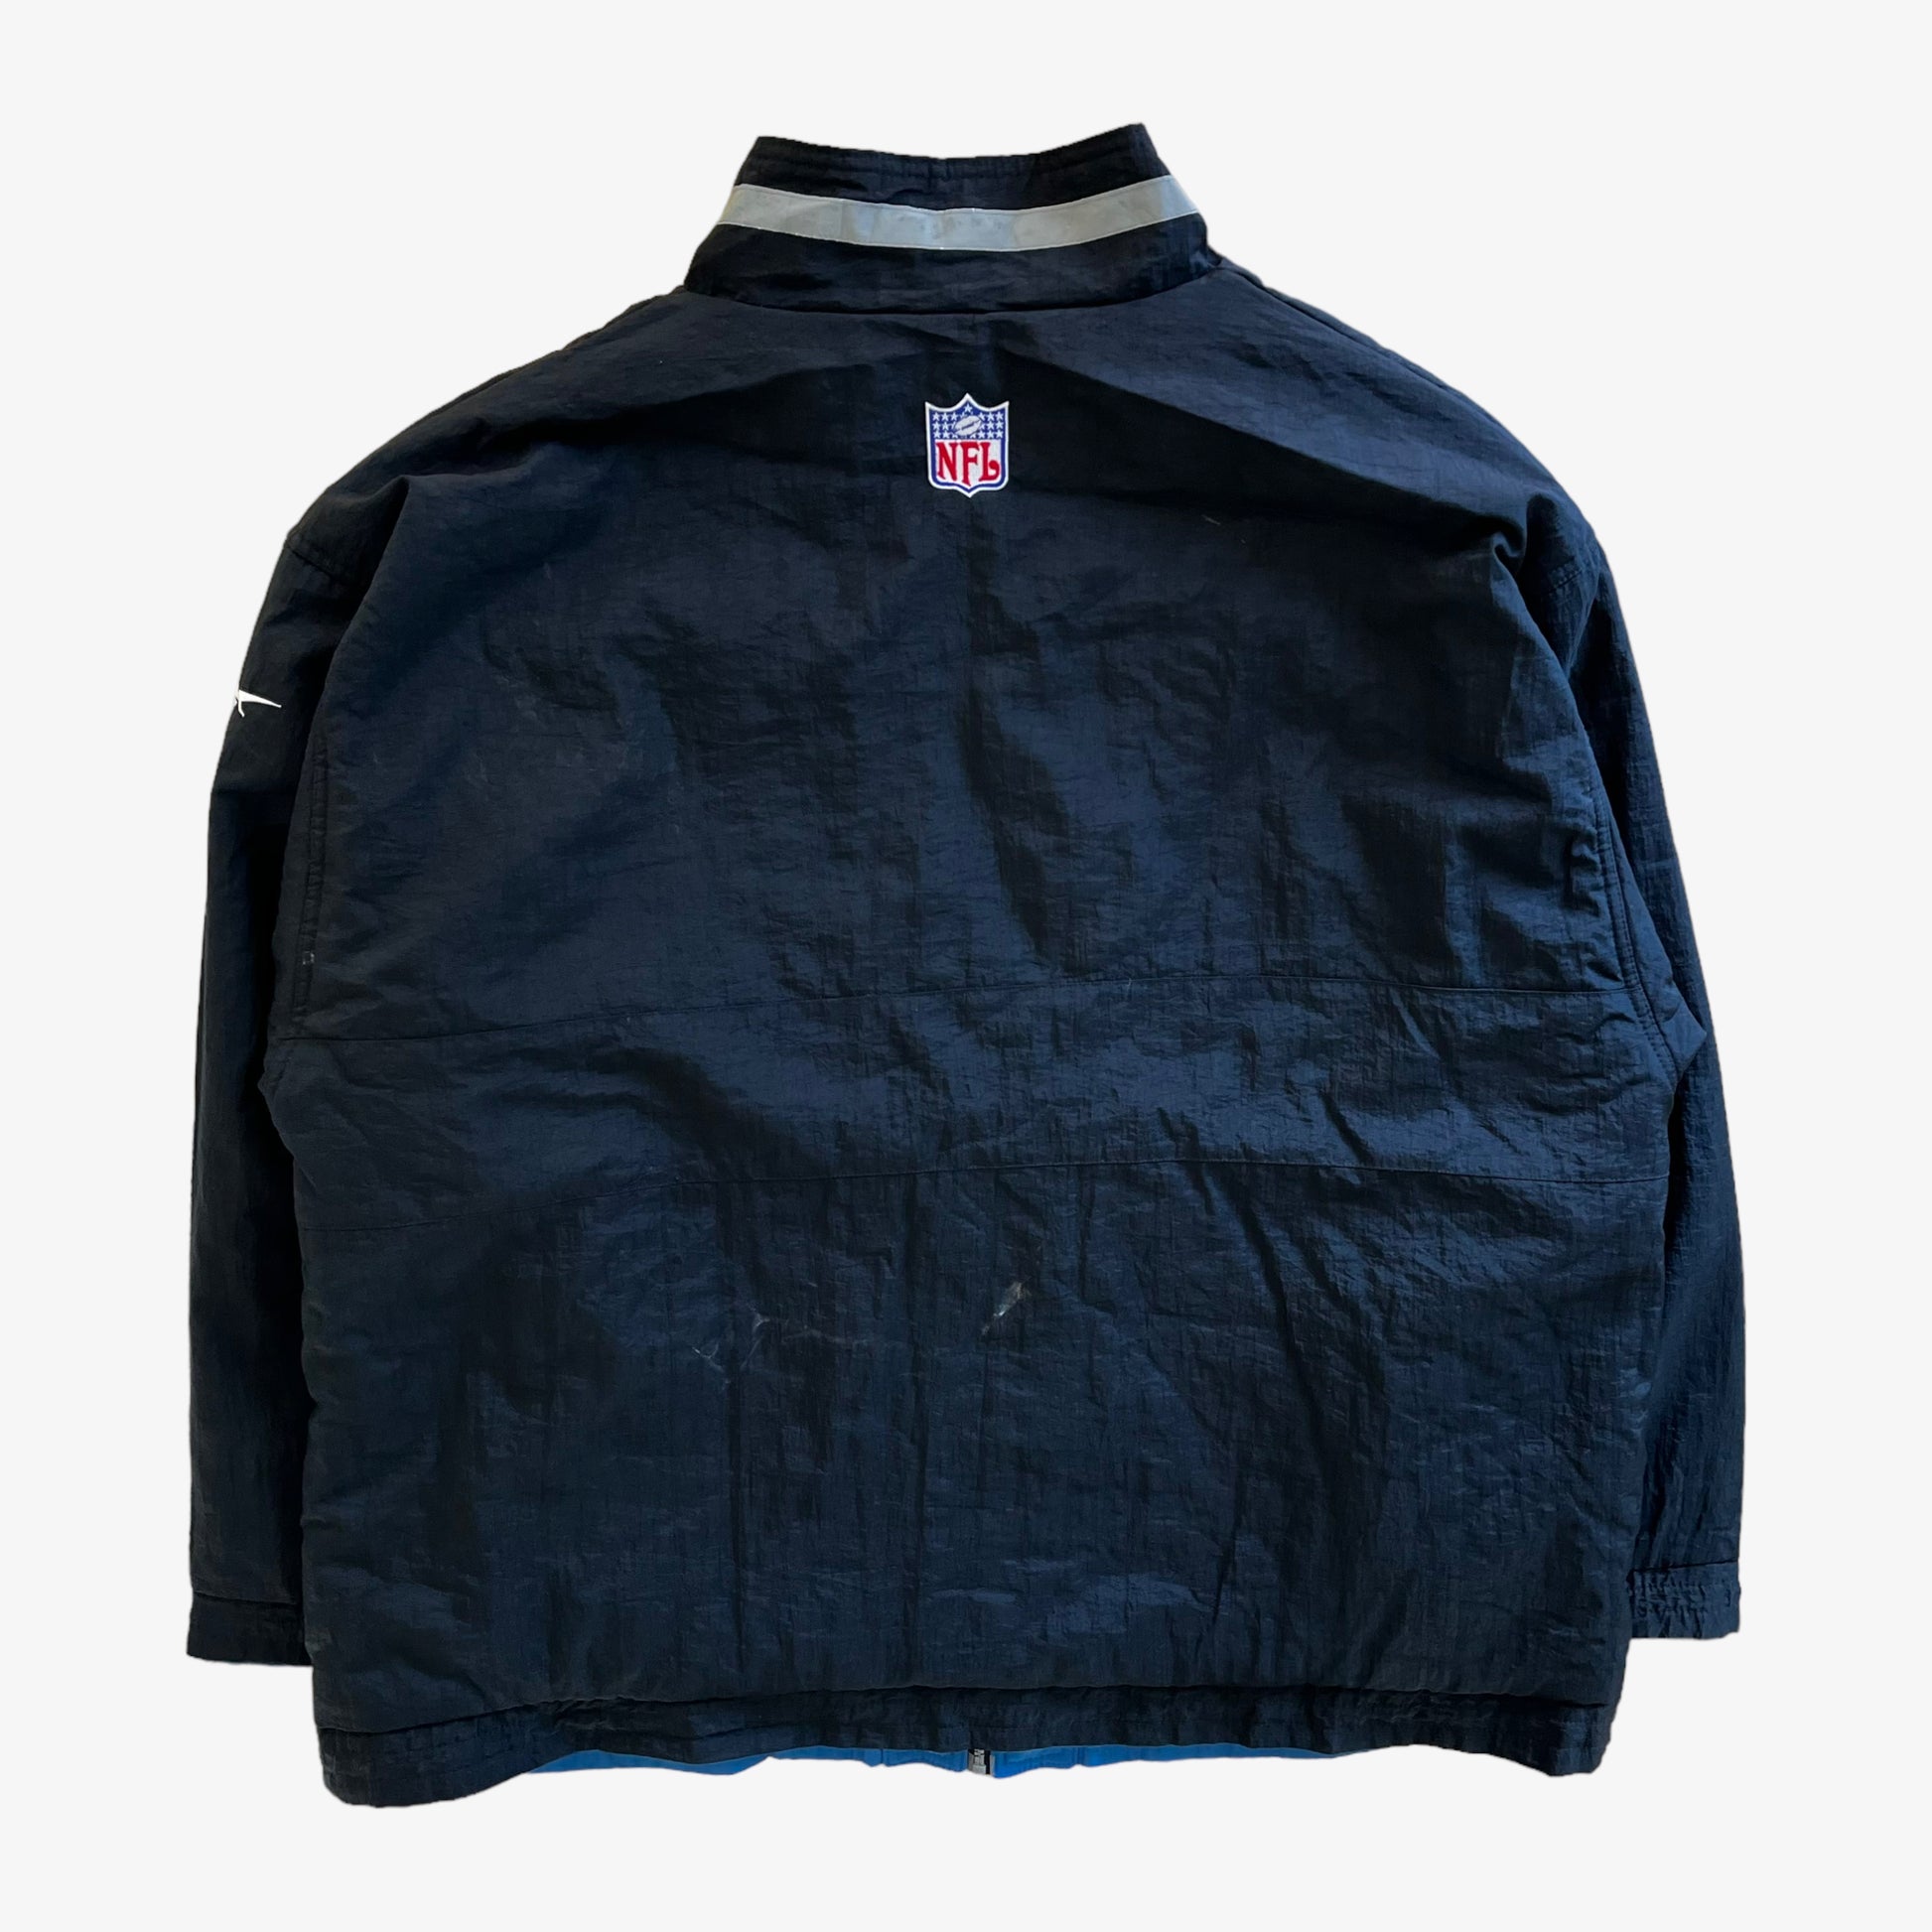 Vintage 90s Reebok NFL Pro Line Detroit Lions Reversible Jacket With Back Spell Out Back - Casspios Dream